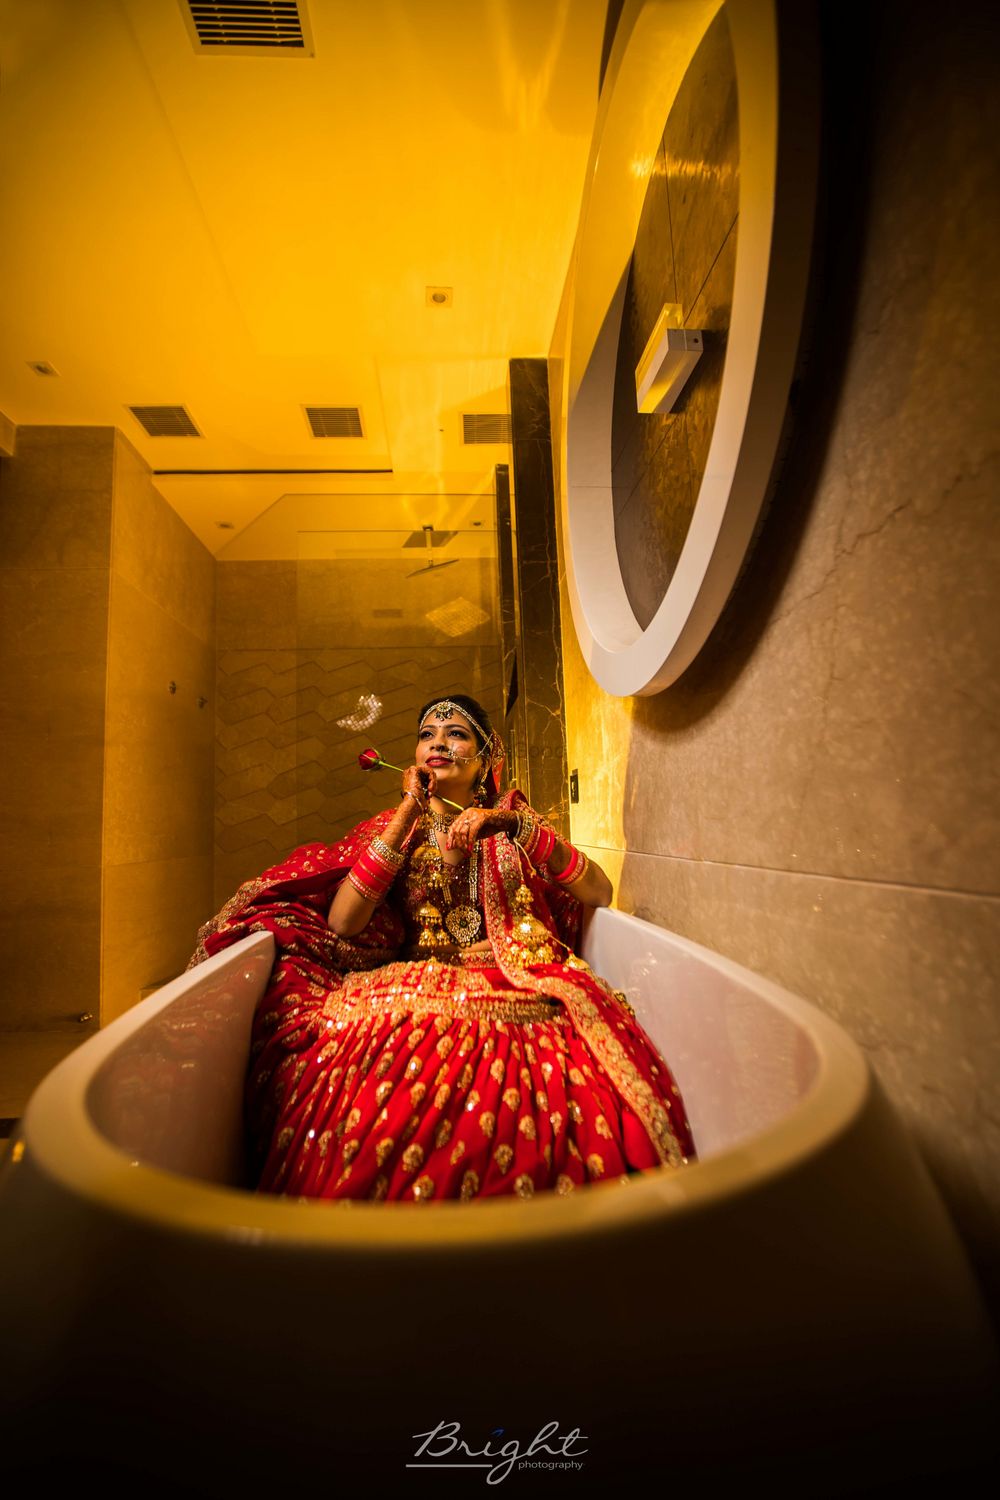 Photo of Bride chilling in bathtub shot before wedding